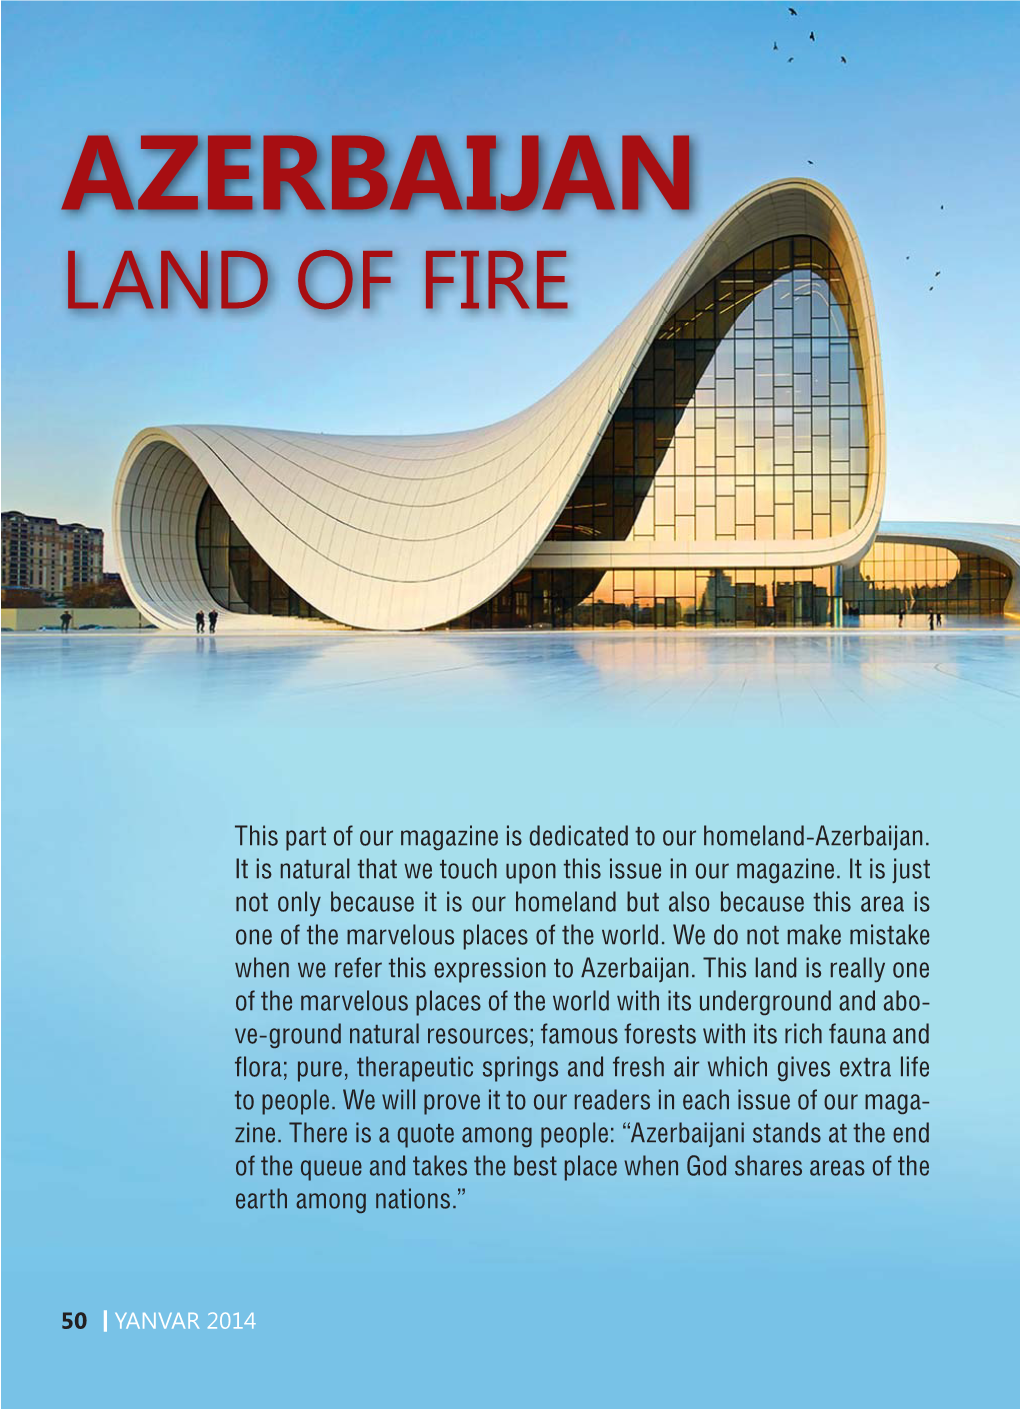 Azerbaijan Land of Fire